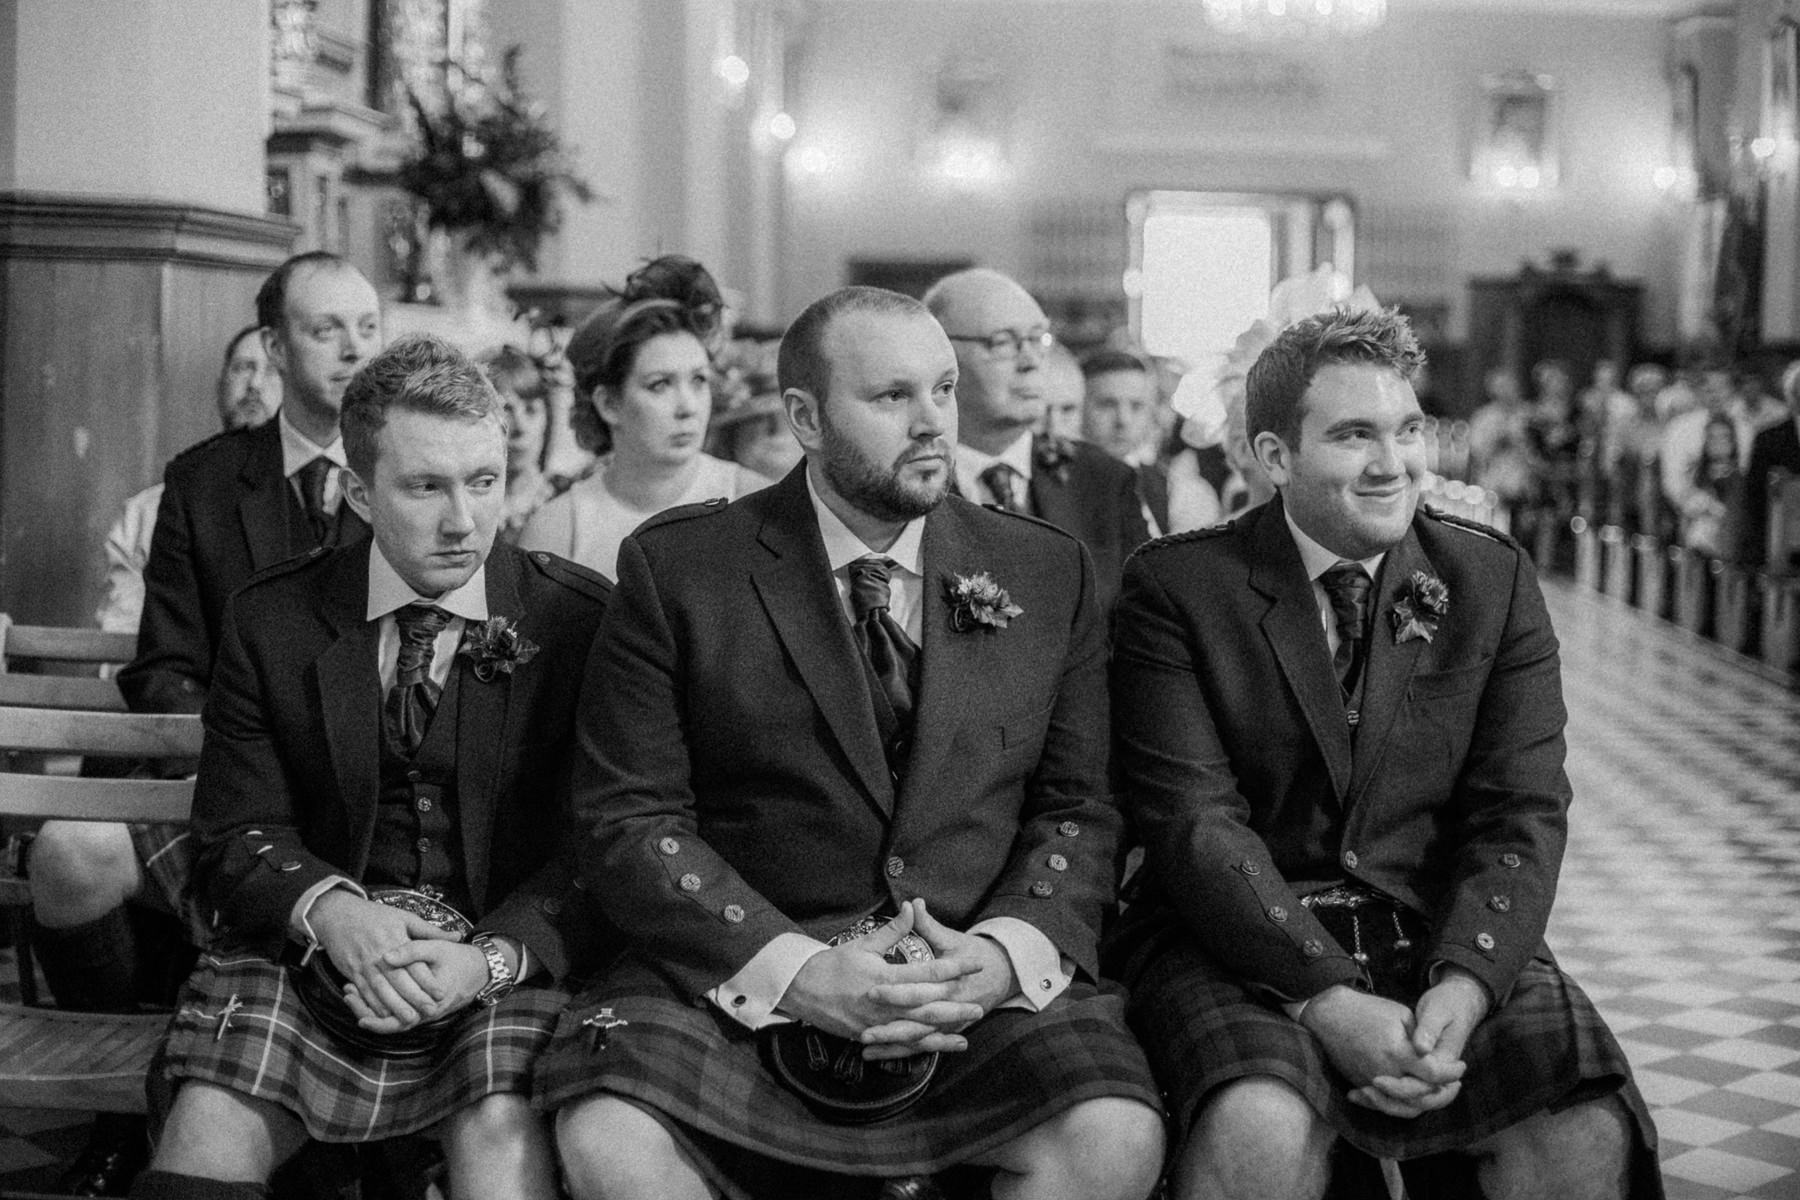 154 polsko szkockie wesele Scottish wedding photographer poland krakow fotograf slubny karol nycz photography